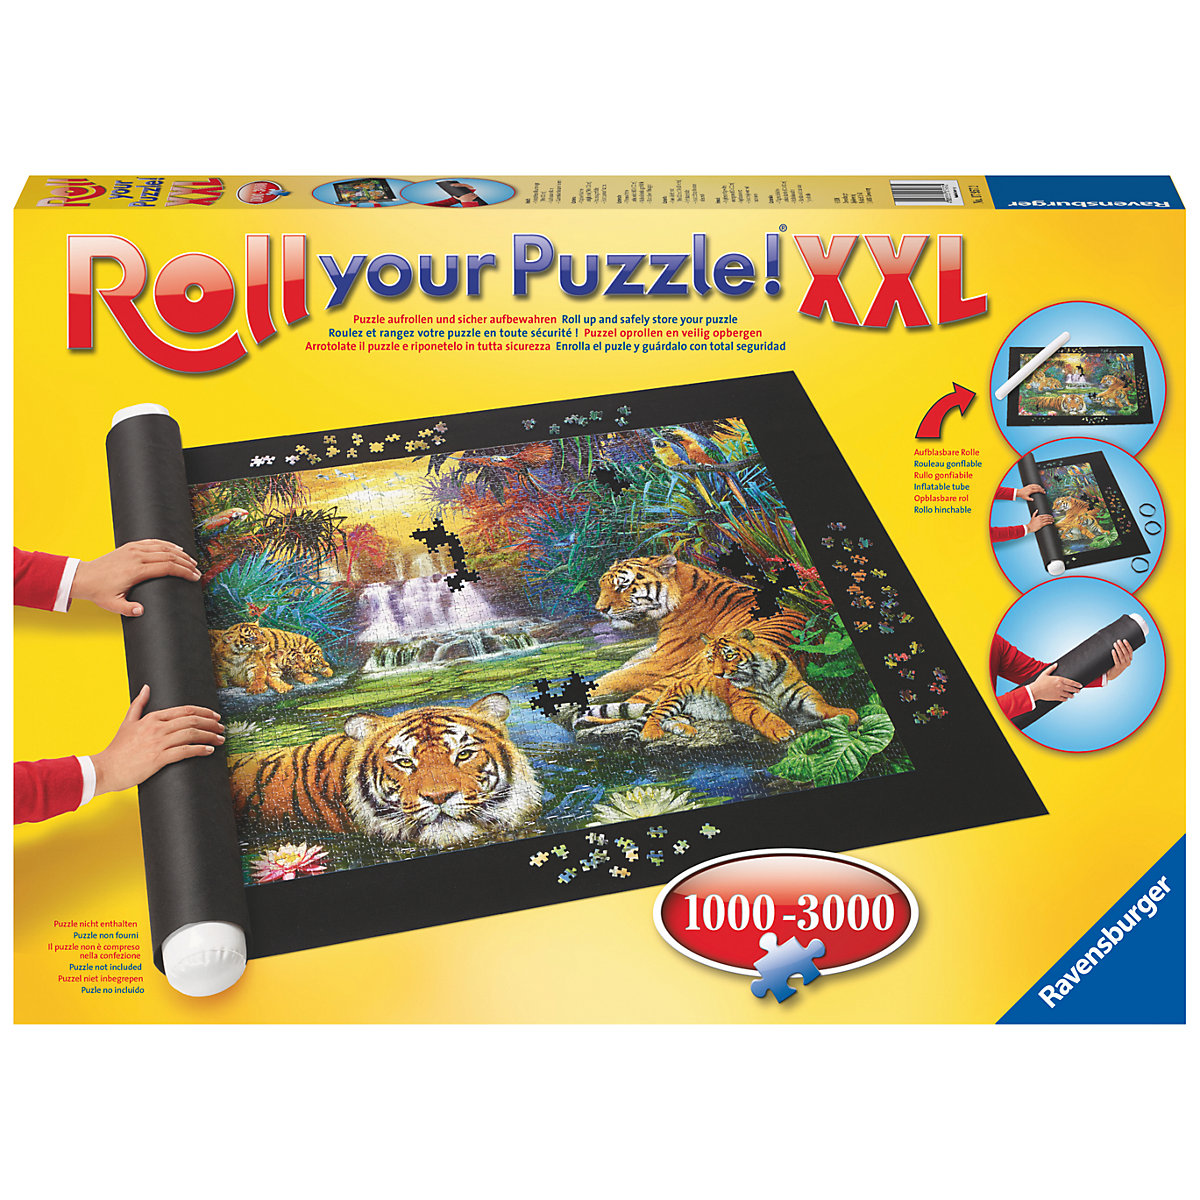 Ravensburger Roll your Puzzle! XXL für 1000-3000 Teile